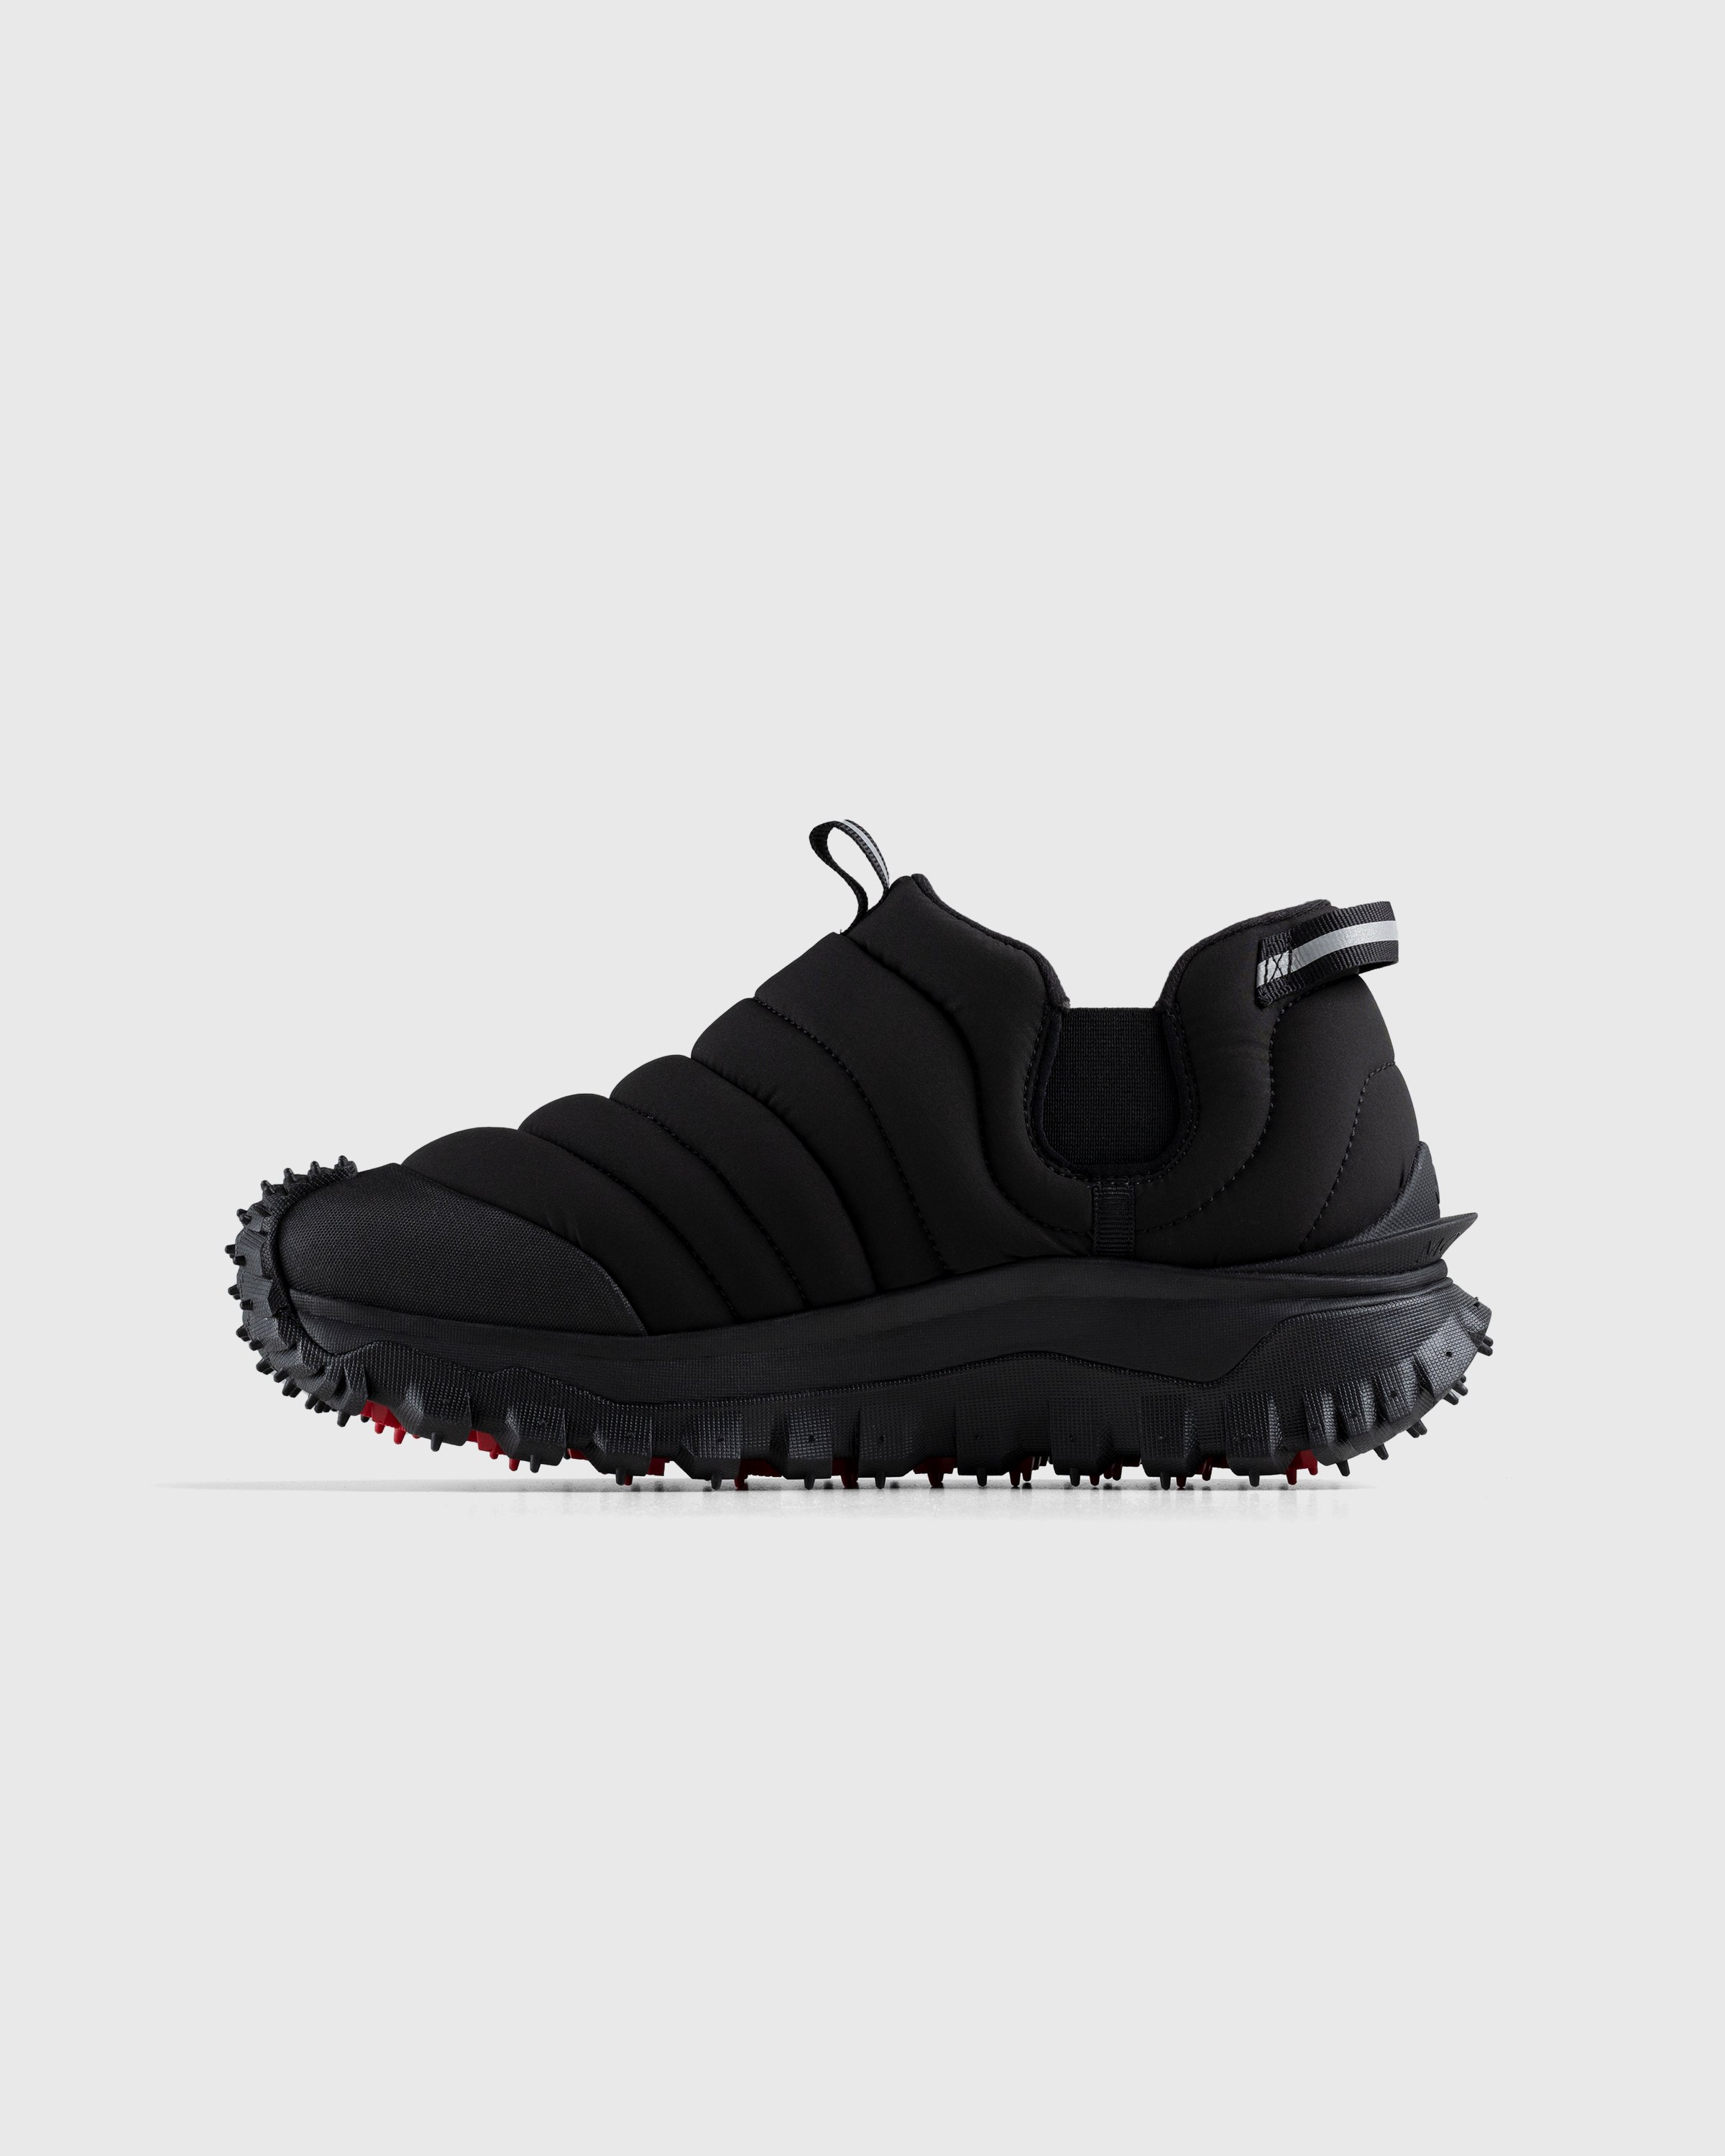 Moncler - Après Trail Sneakers Black - Footwear - Black - Image 2